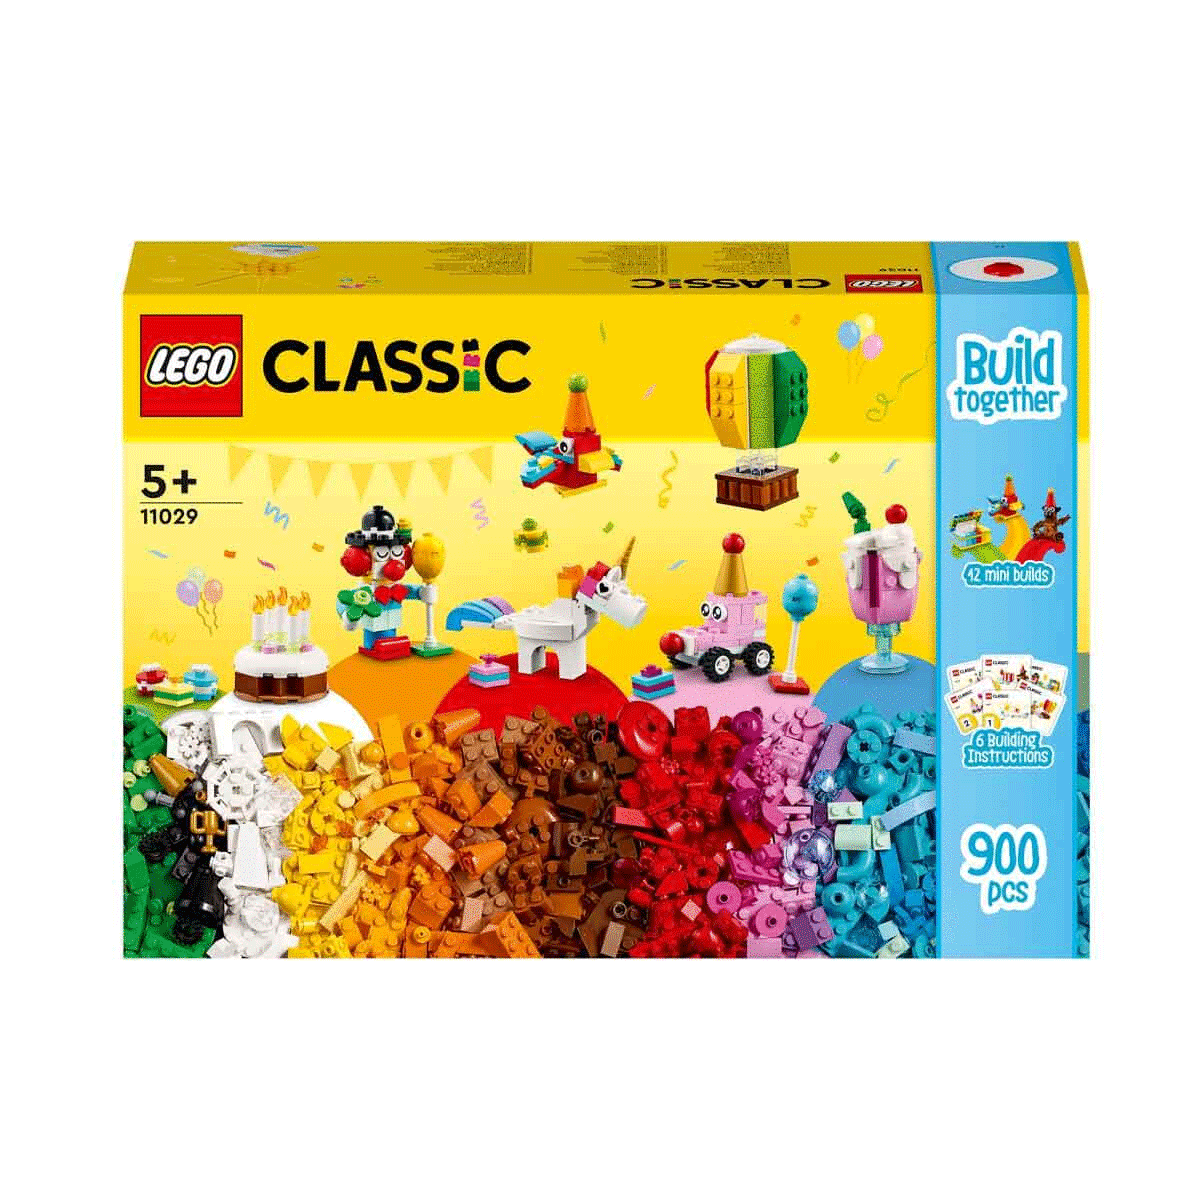 11029 LEGO® Classic Yaratıcı Parti Kutusu 900 parça +5 yaş